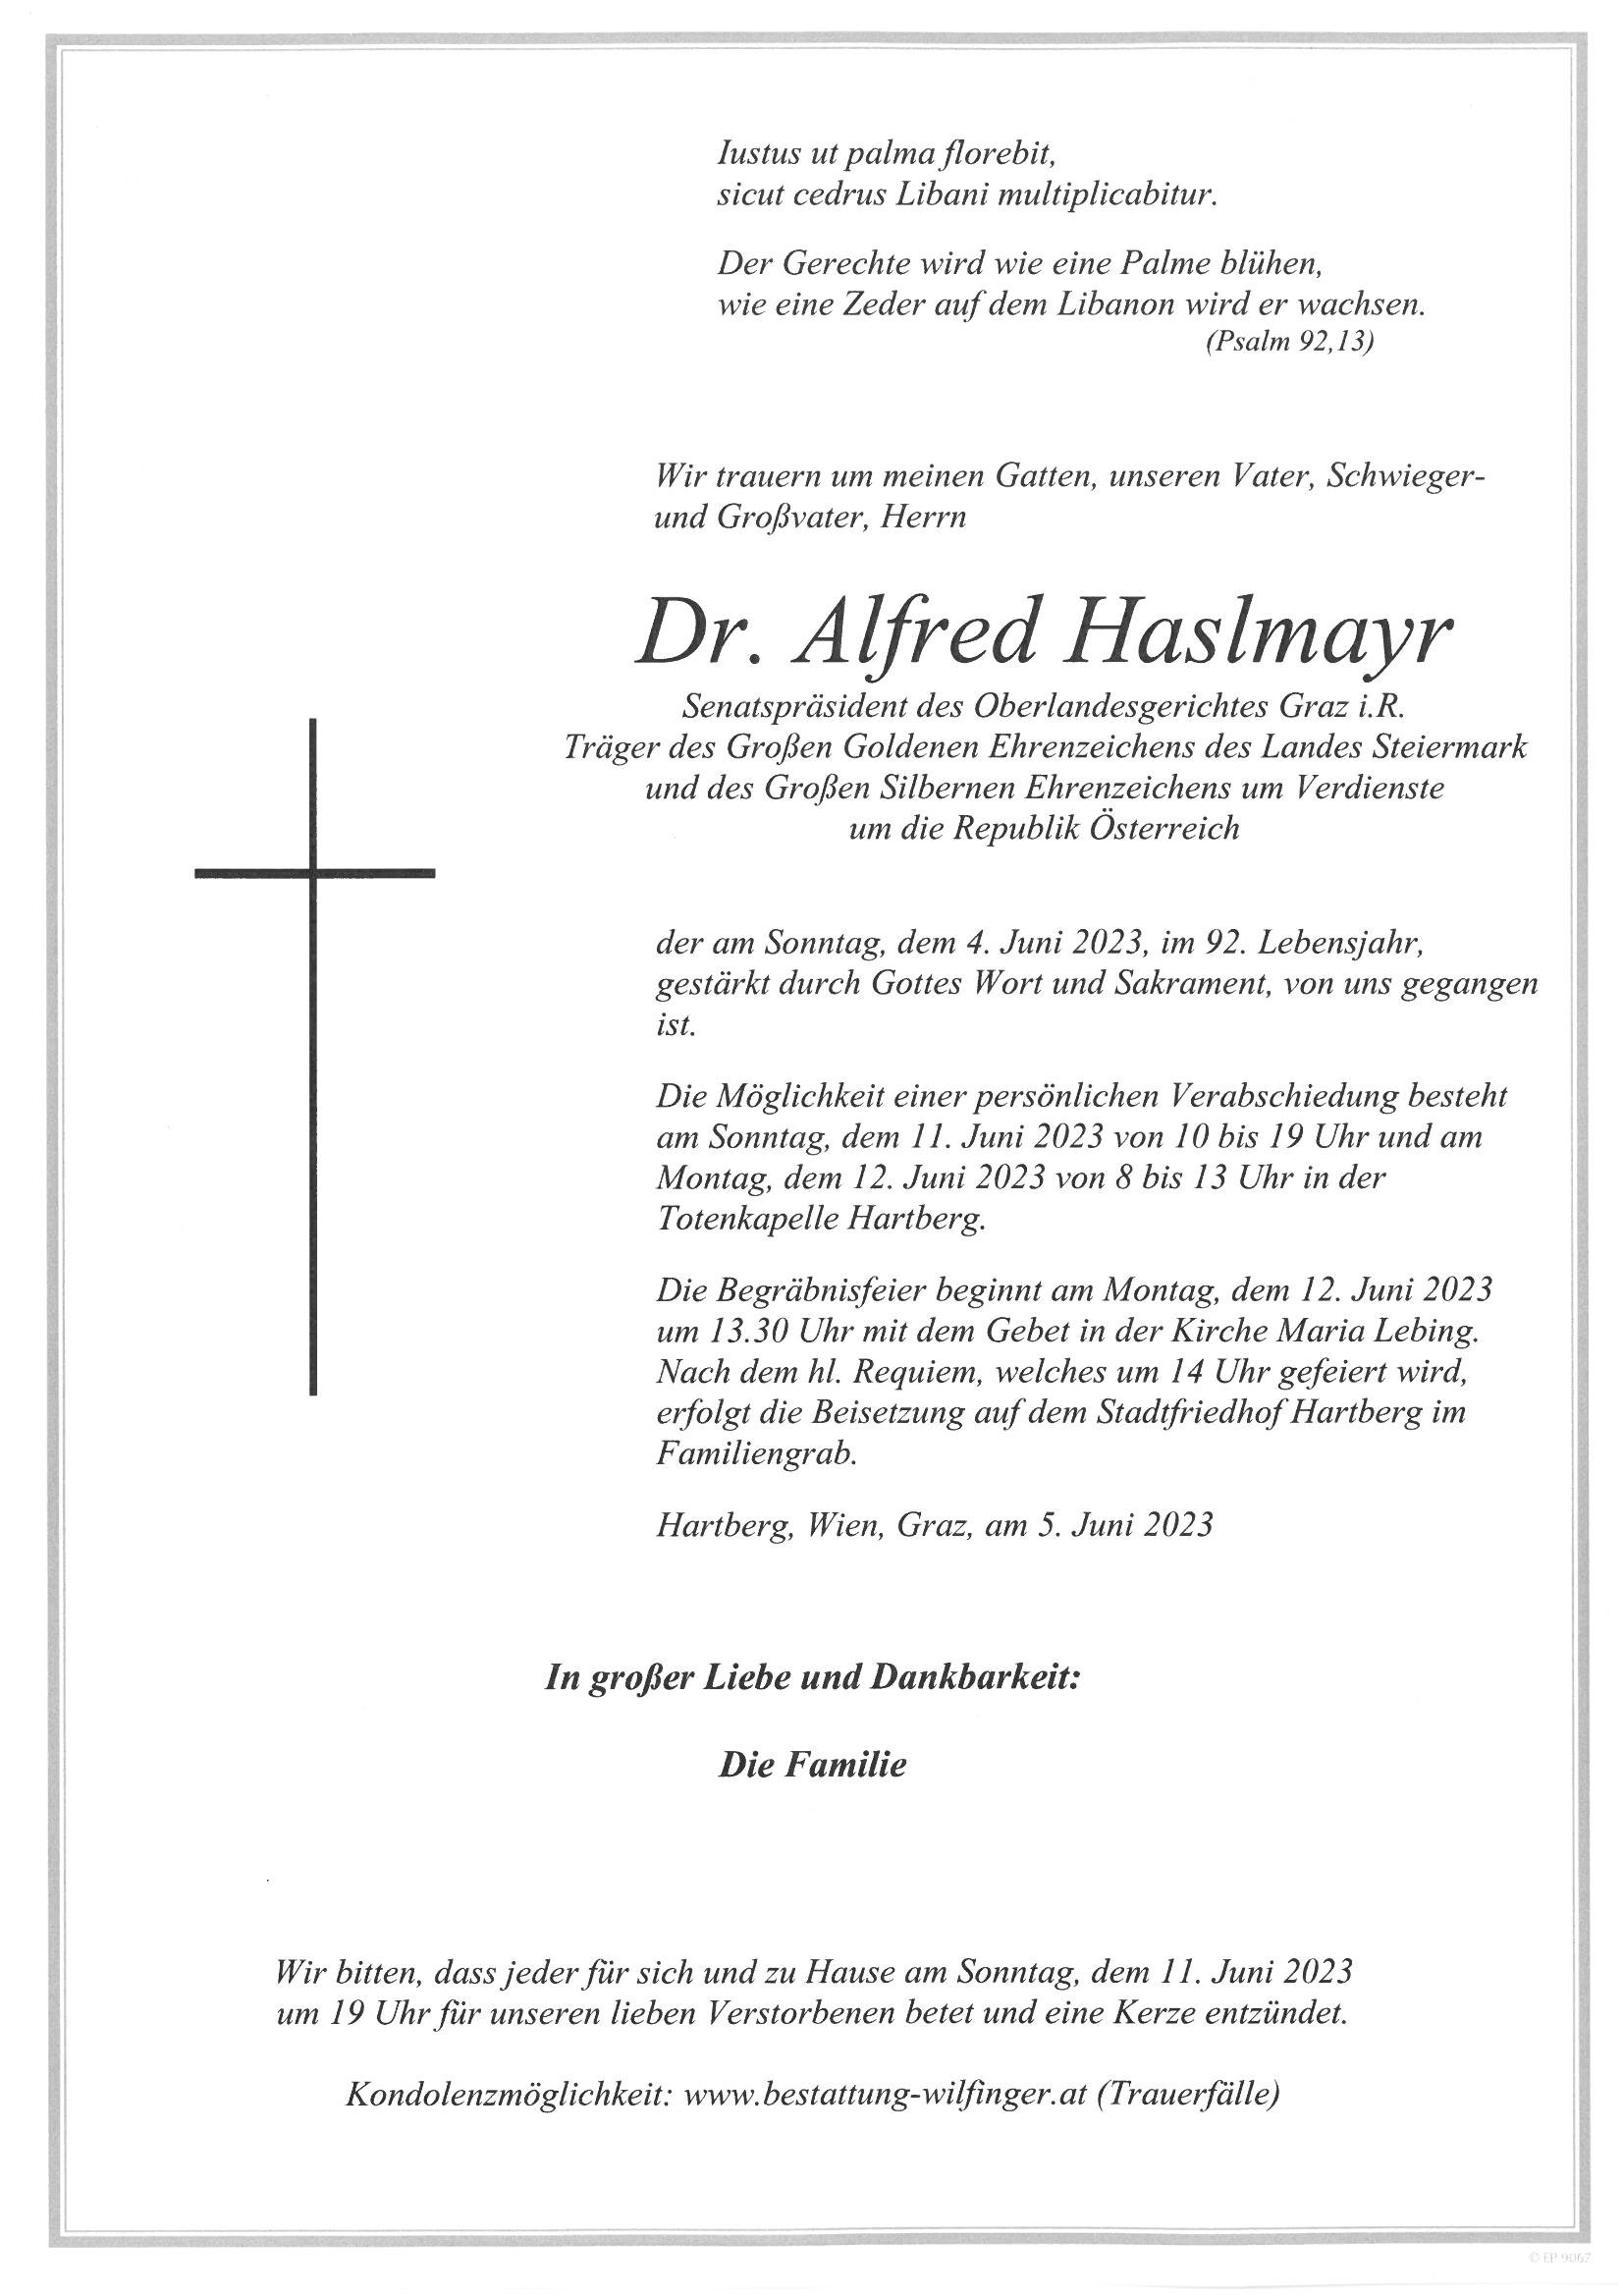 Dr. Alfred Haslmayr, Hartberg